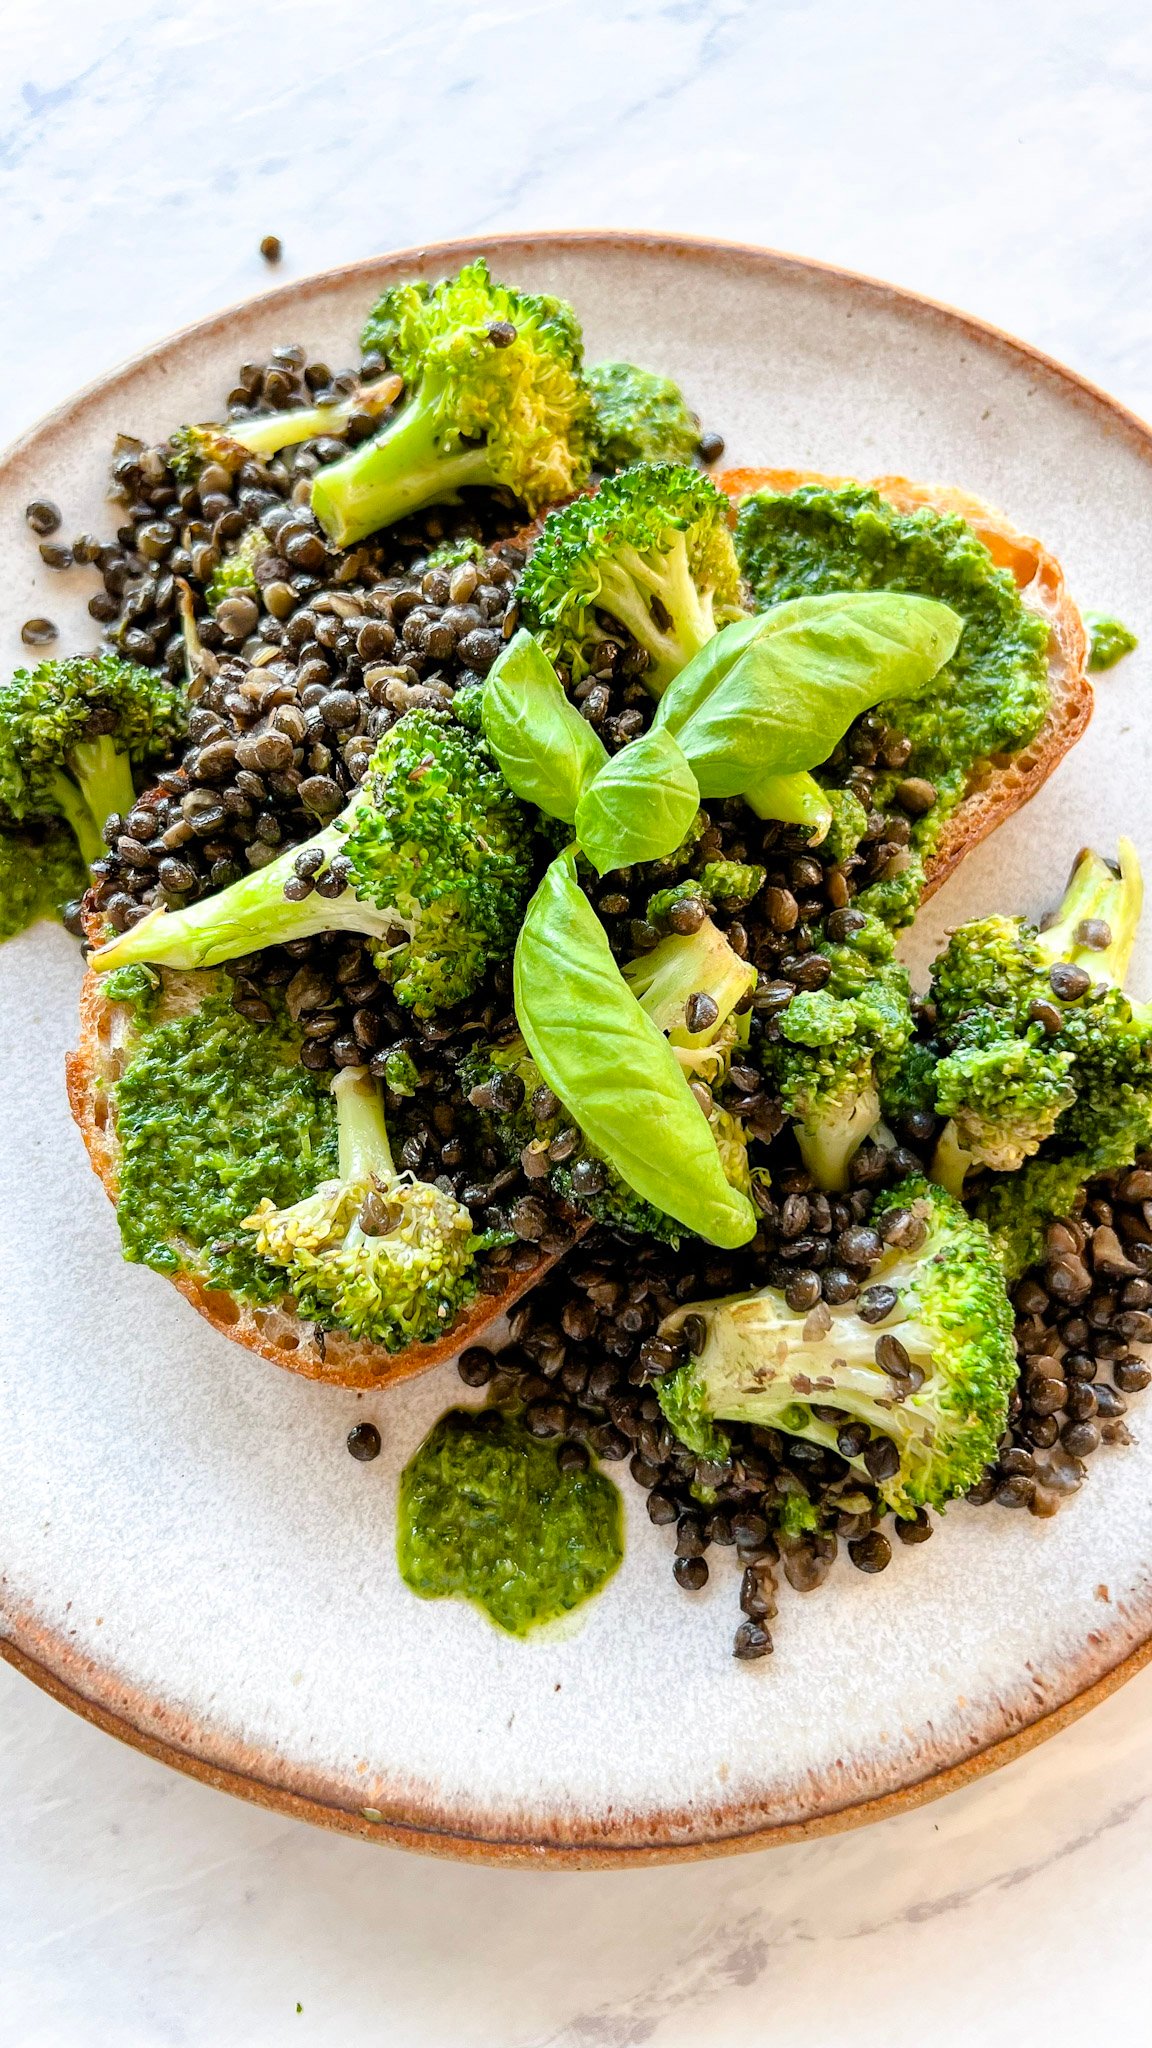 Charred Broccoli and Black Lentils over Sourdough